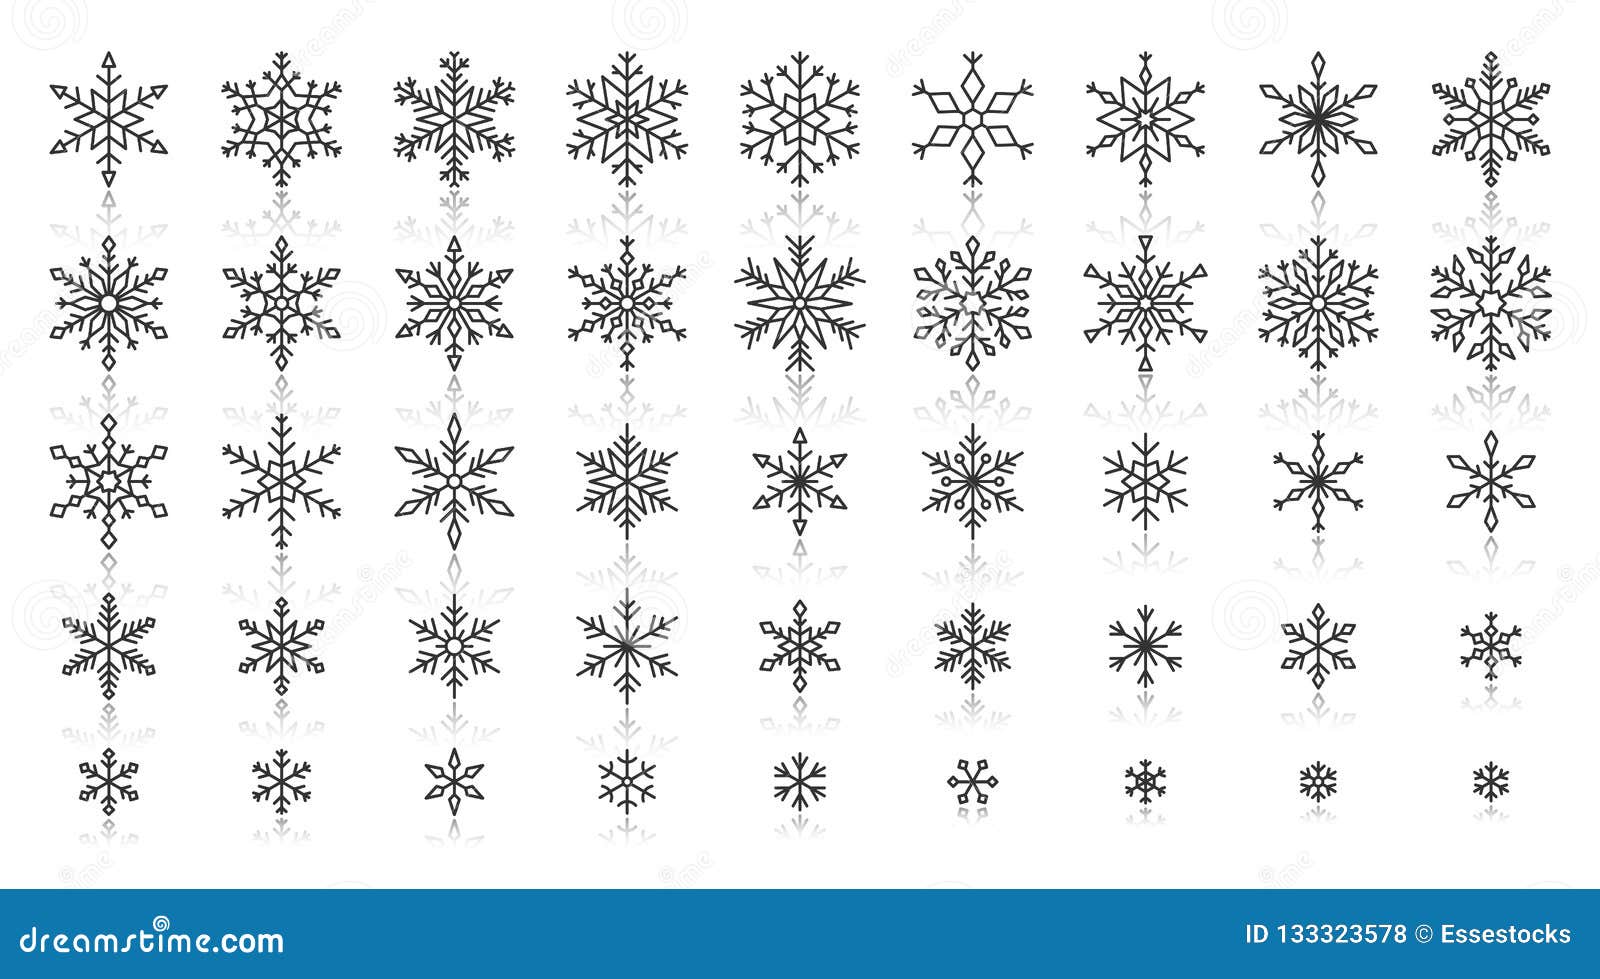 snowflake simple black line icons  set